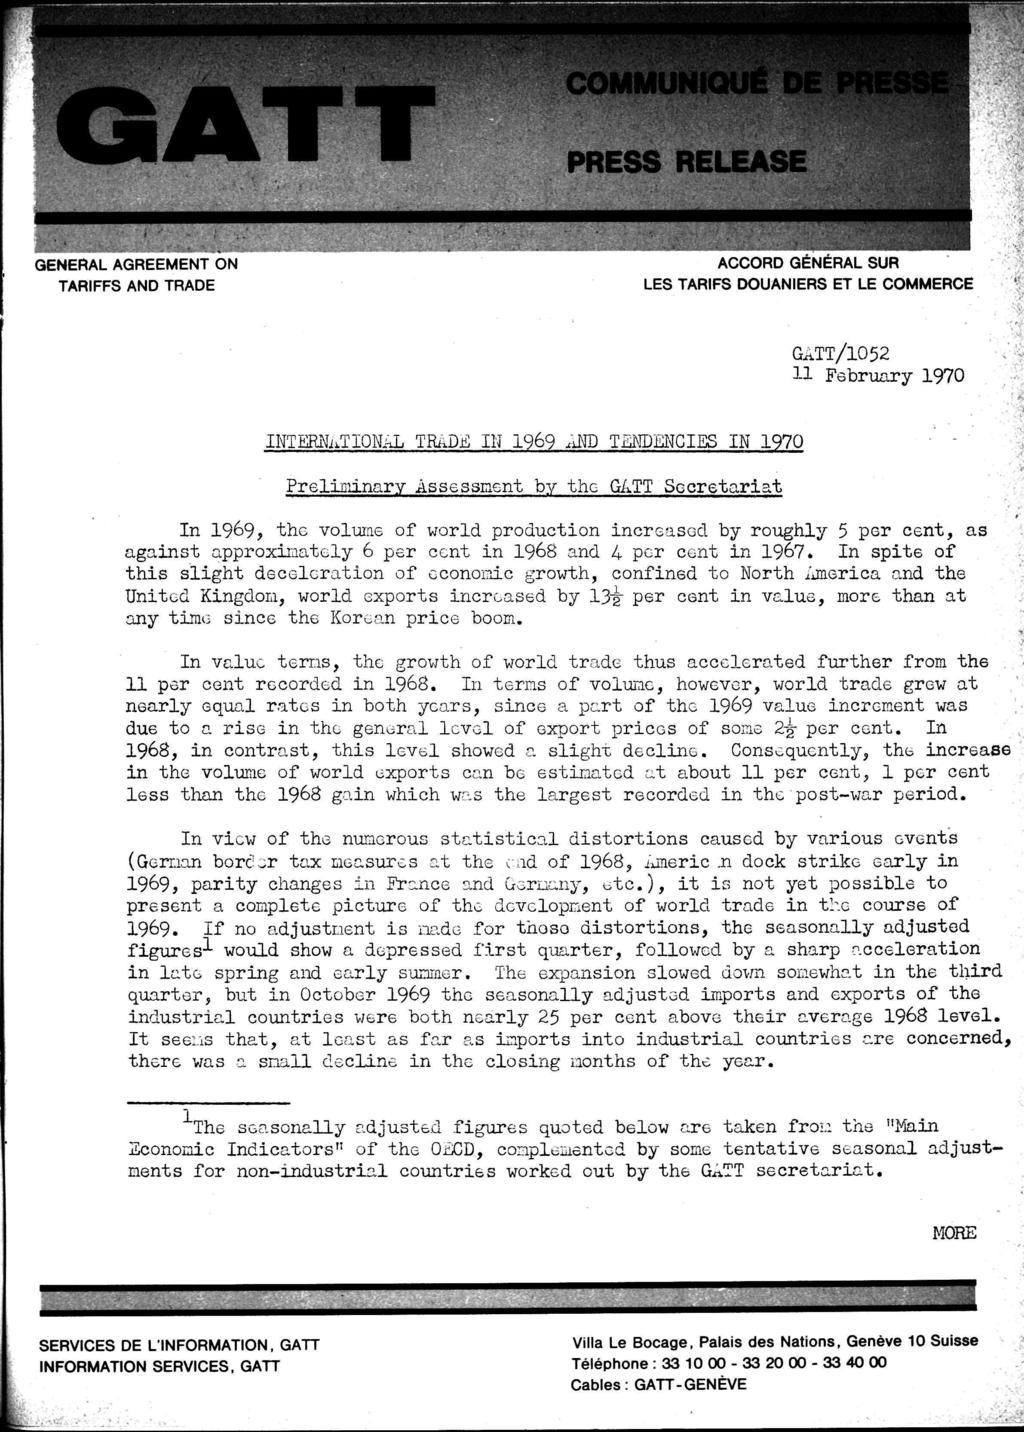 isi WÊÈBB9BÊBUËËÊËBÊÊBBËÊÊ8BÊËÊB8BË GATT PRESS RELEASE GENERAL AGREEMENT ON TARIFFS AND TRADE ACCORD GENERAL SUR LES TARIFS DOUANIERS ET LE COMMERCE GATT/1052 11 February 1970 r INTERNATIONAL TRADE